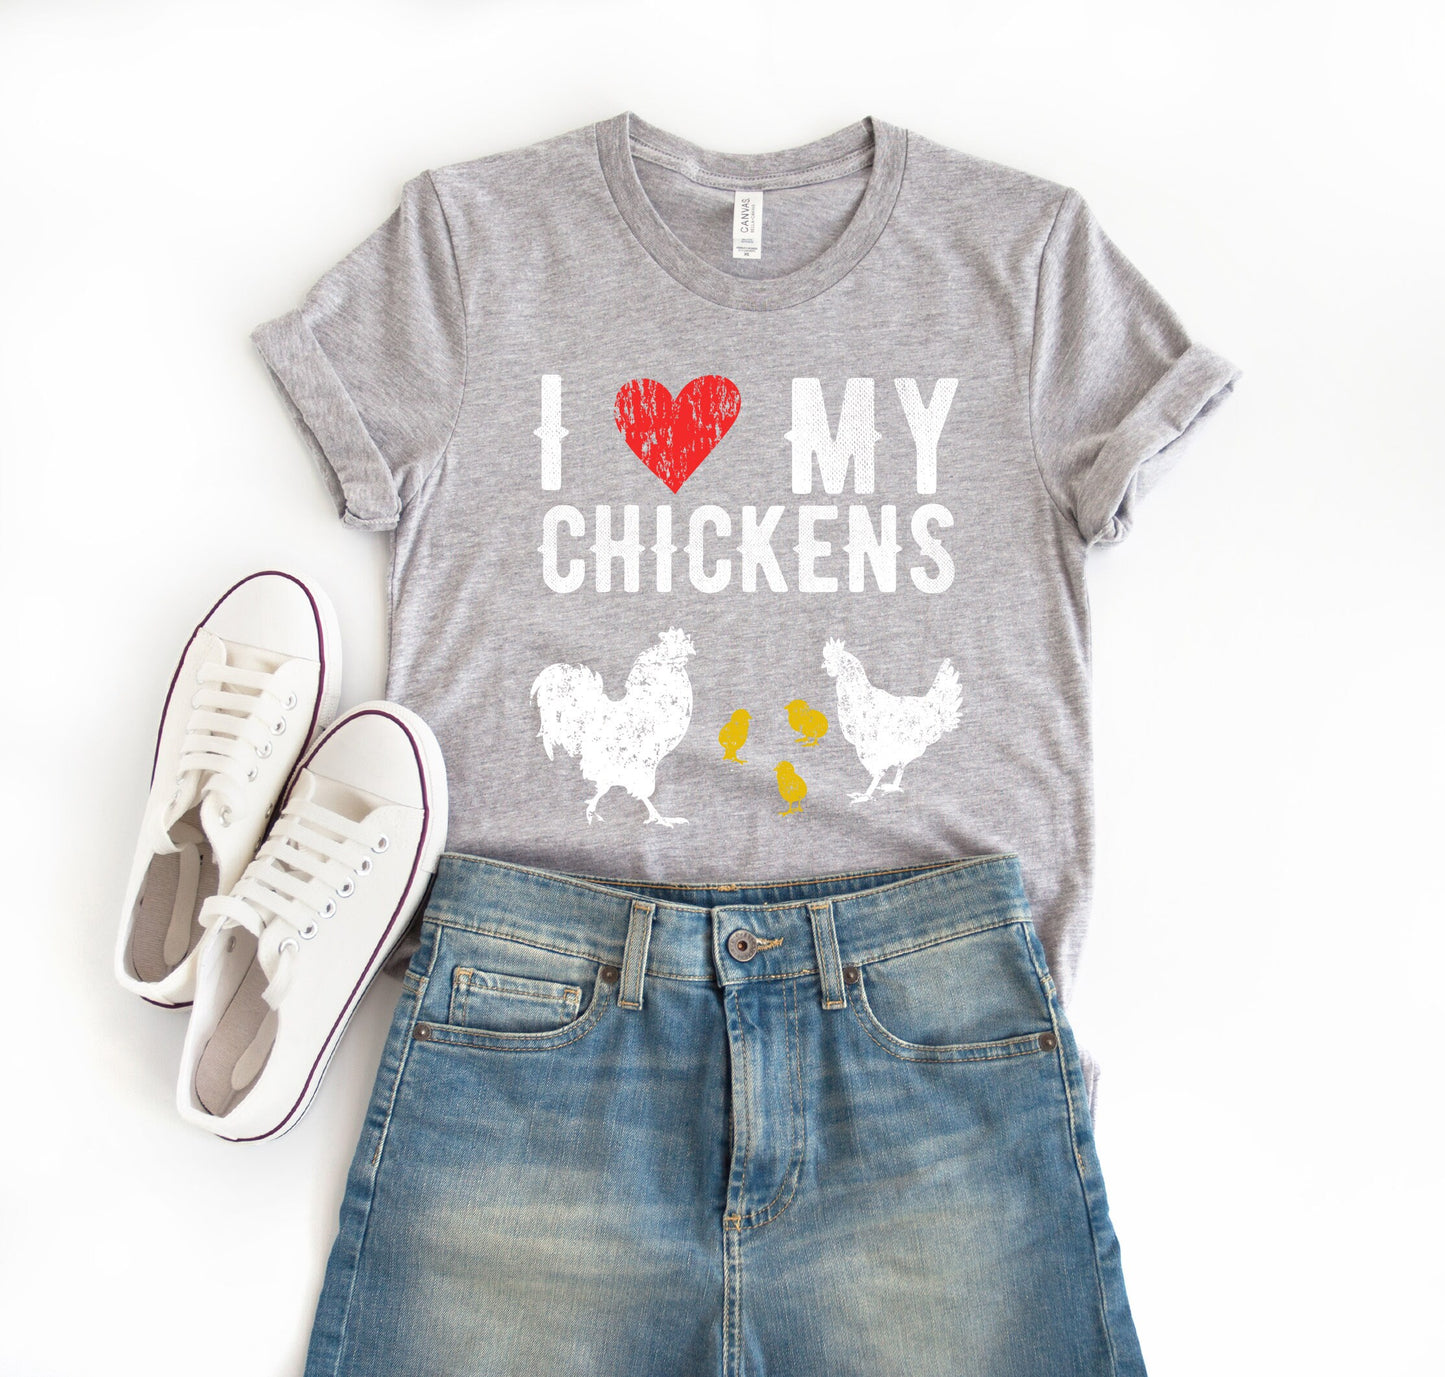 I Love My Chickens Cute Chicken Farmer Free Range Tee Shirt Ultra Soft Graphic Tee Unisex Soft Tee T-shirt for Women or Men